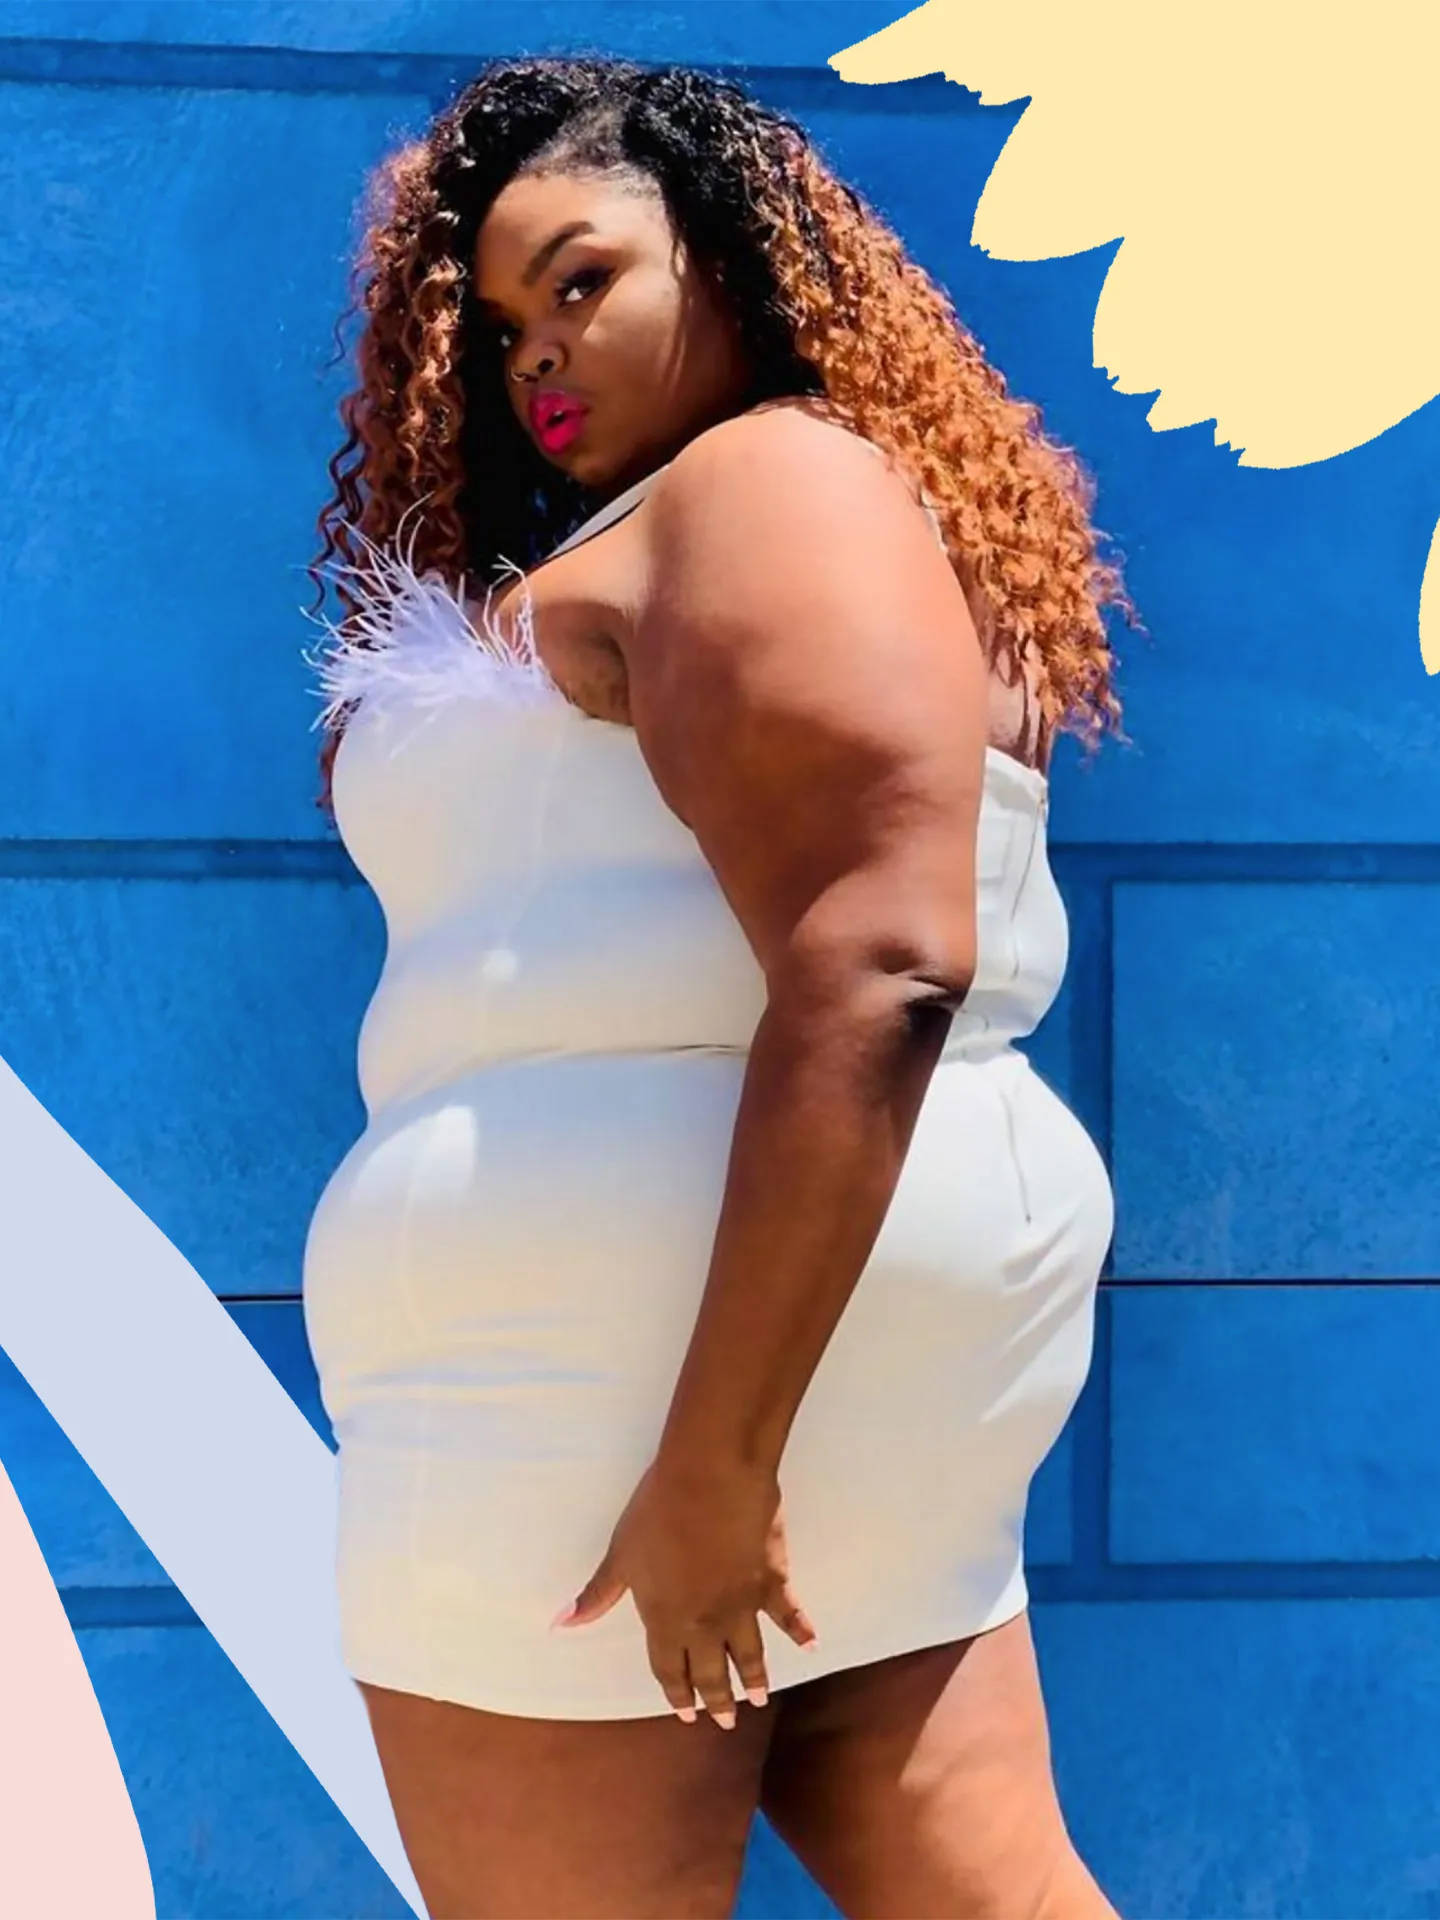 Fat Black Woman In White Dress Wallpaper